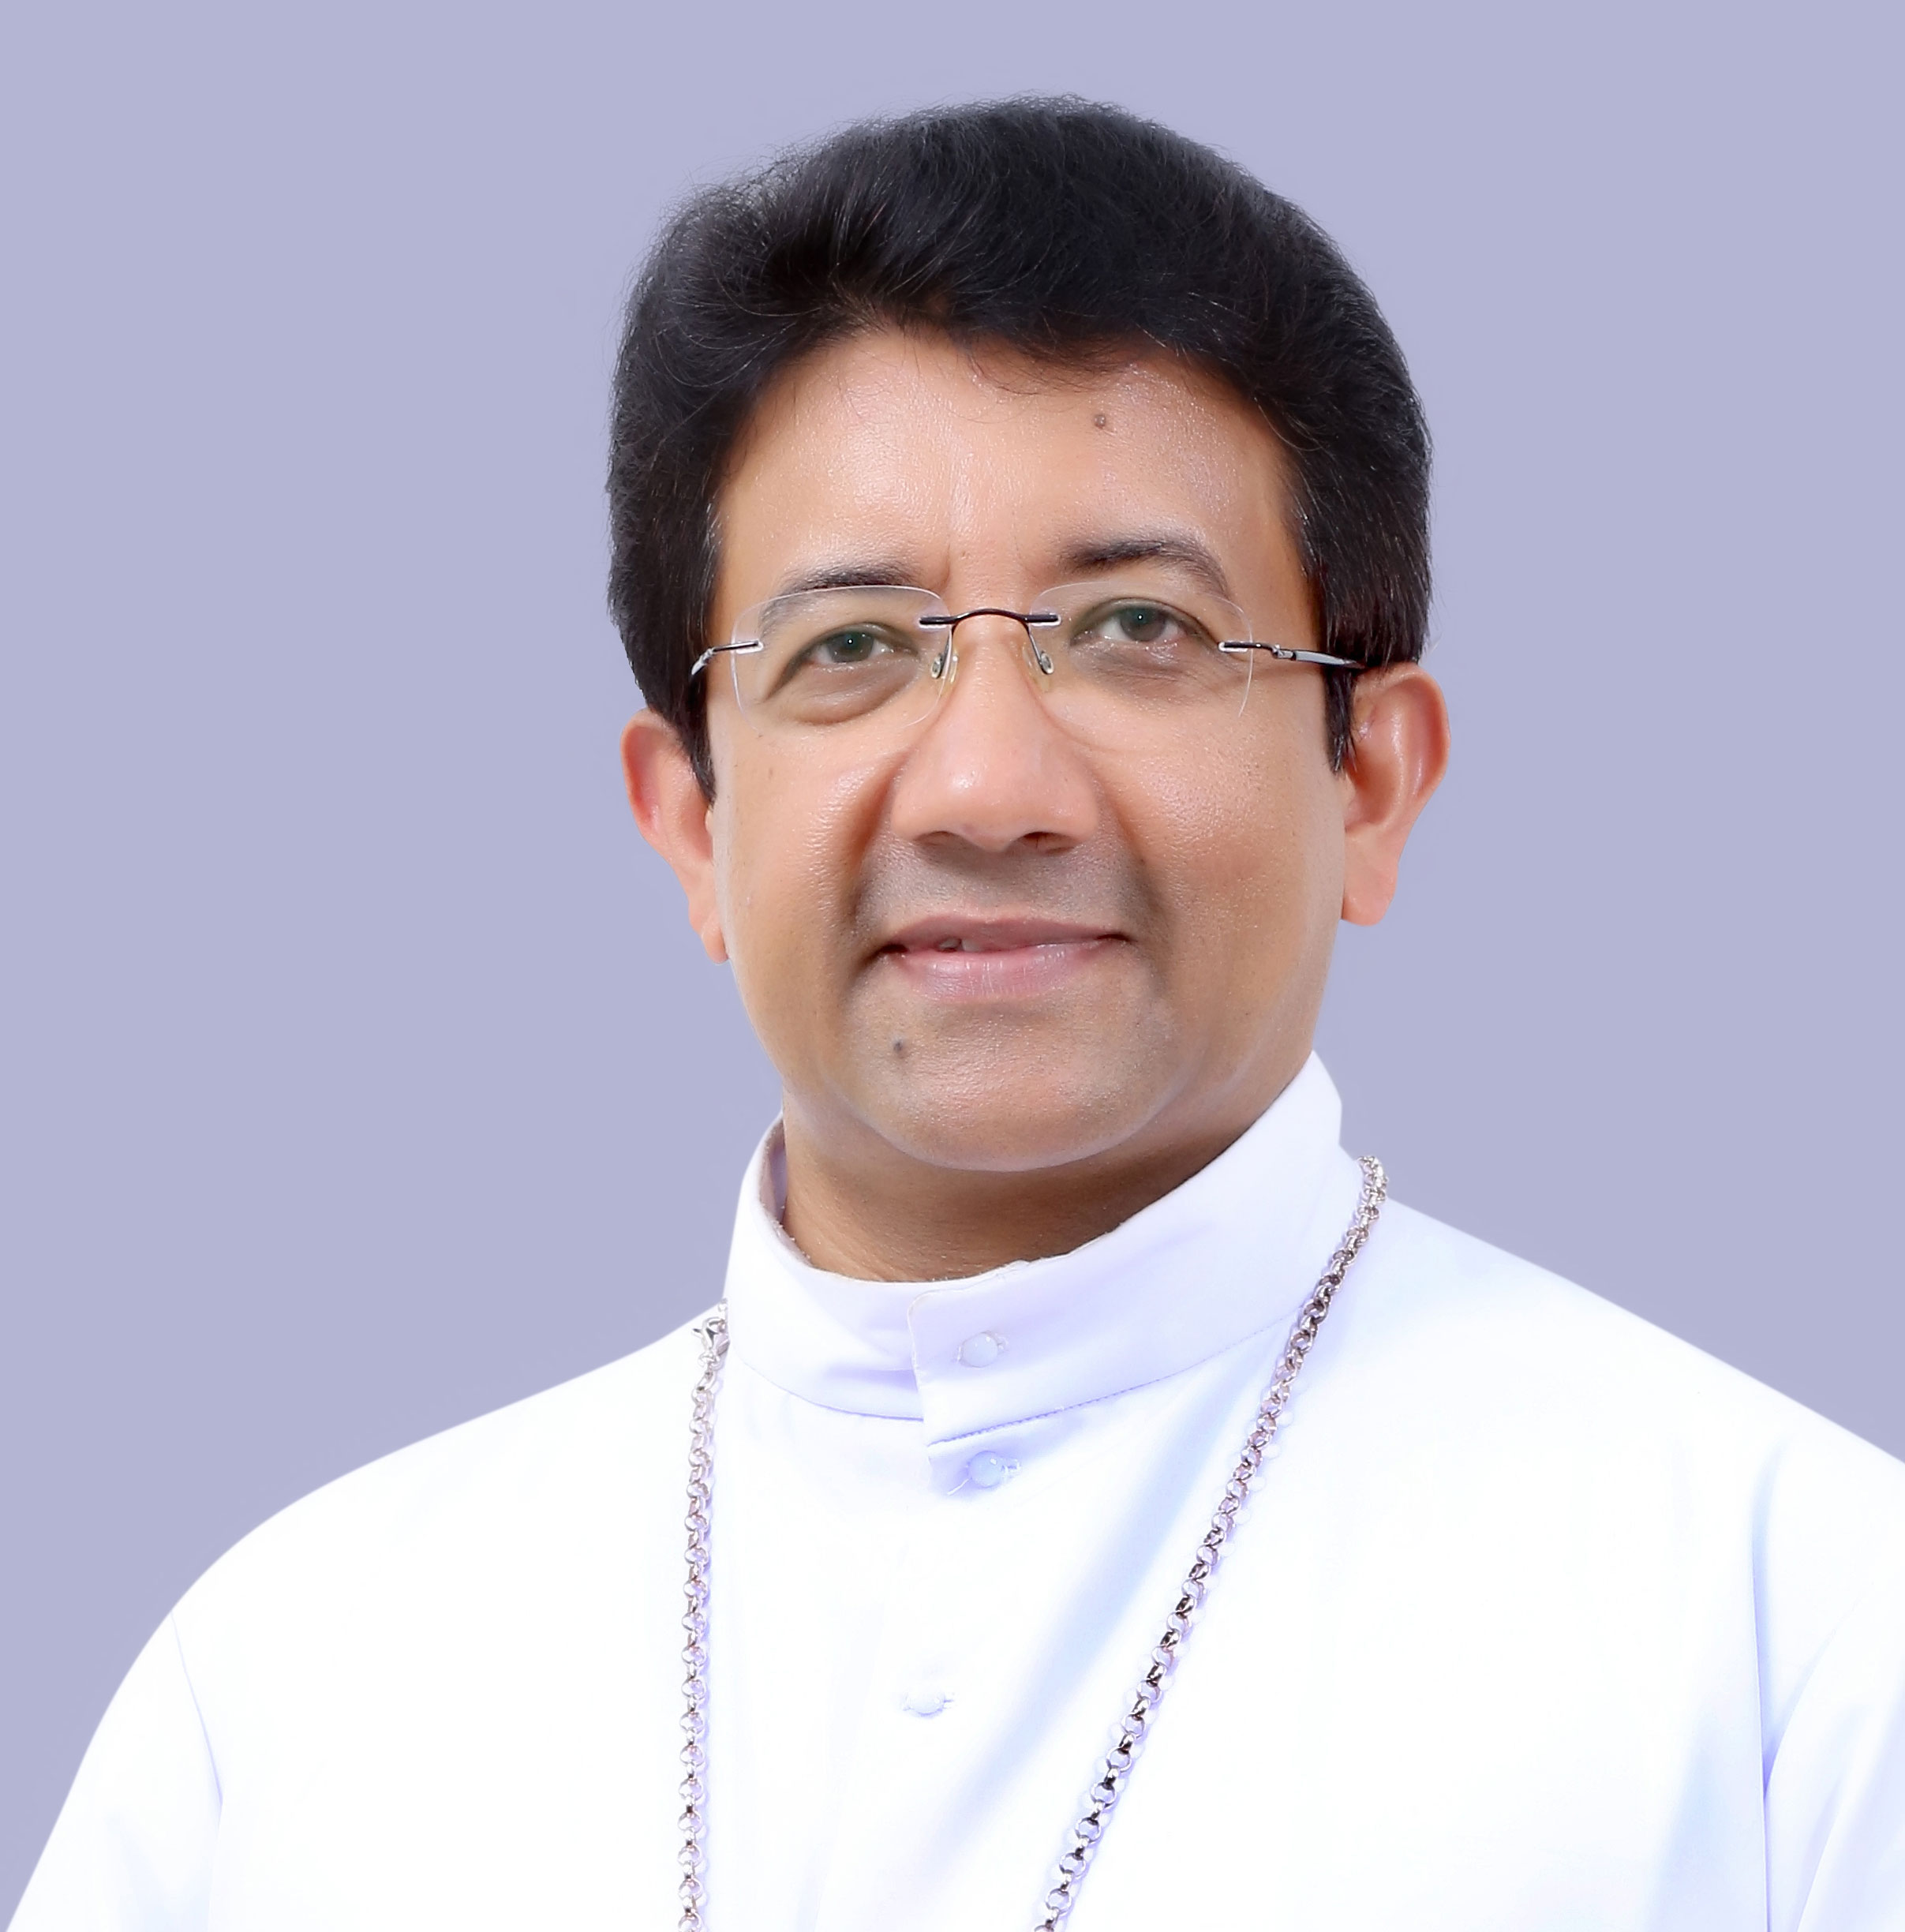 Archbishop Kurian Mathew Vayalunkal